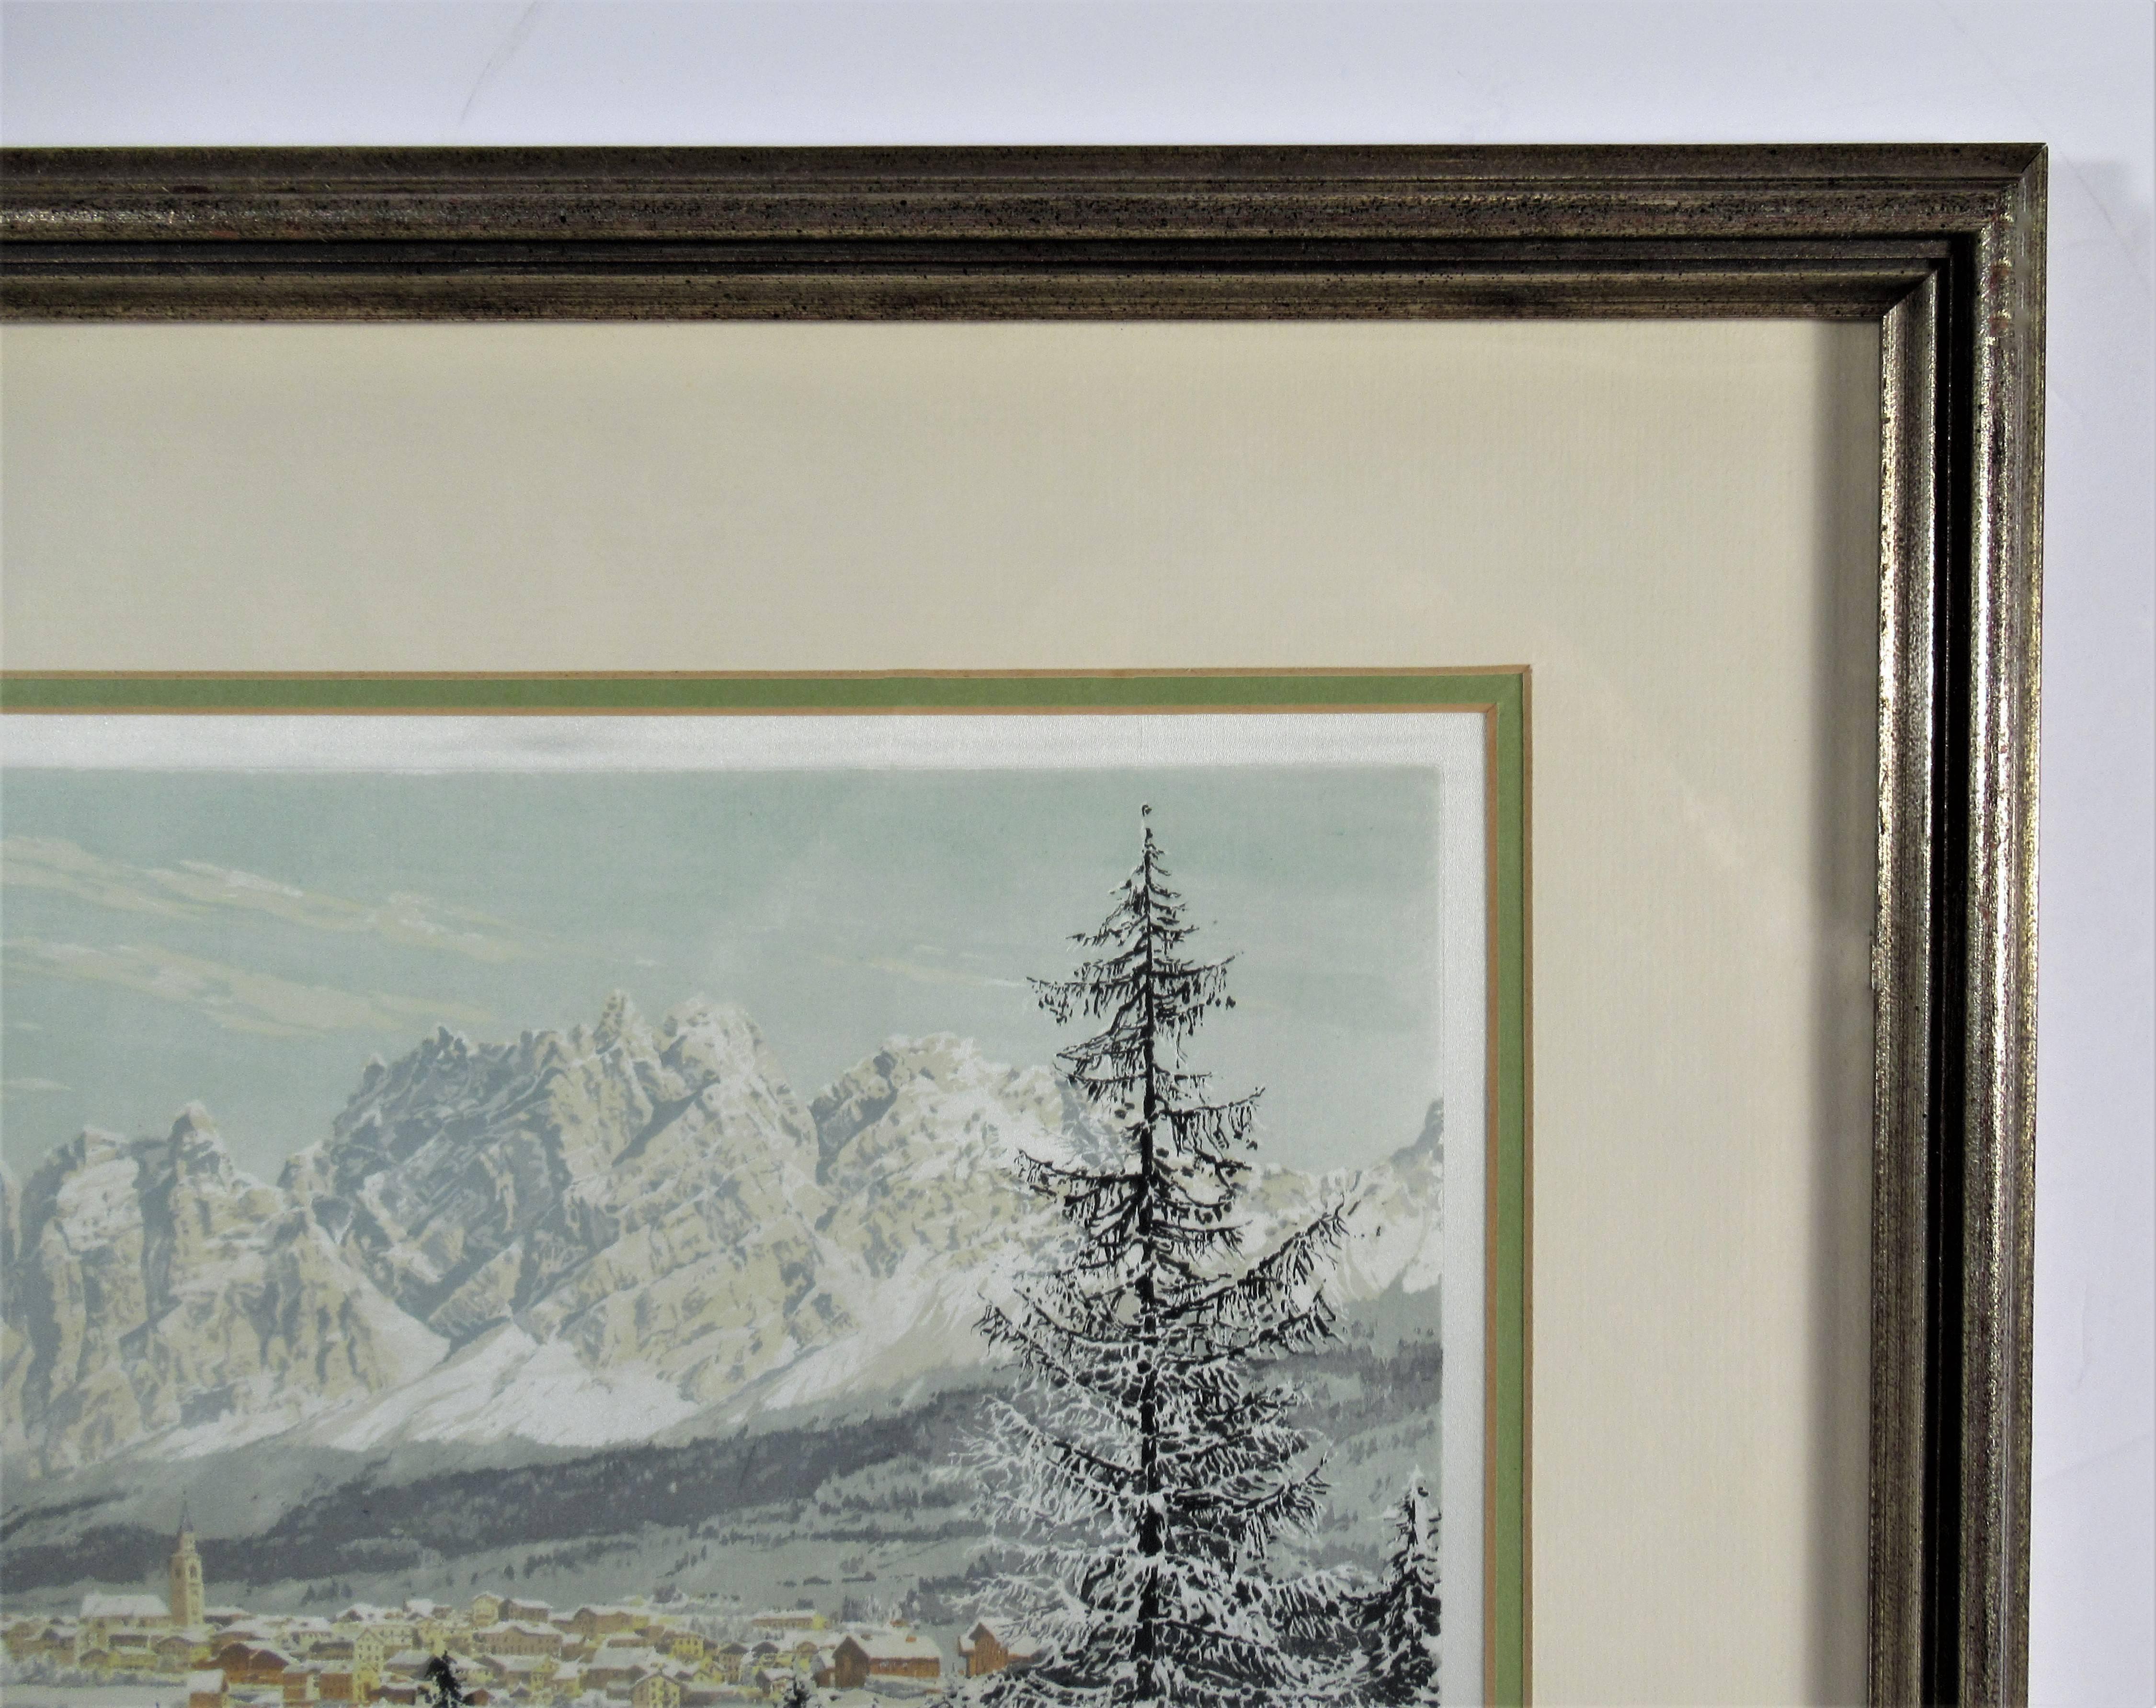 Peak of Wilder Kaiser, Kitzbuhelhom, Tyrol Alps - Realist Print by Hans Figura